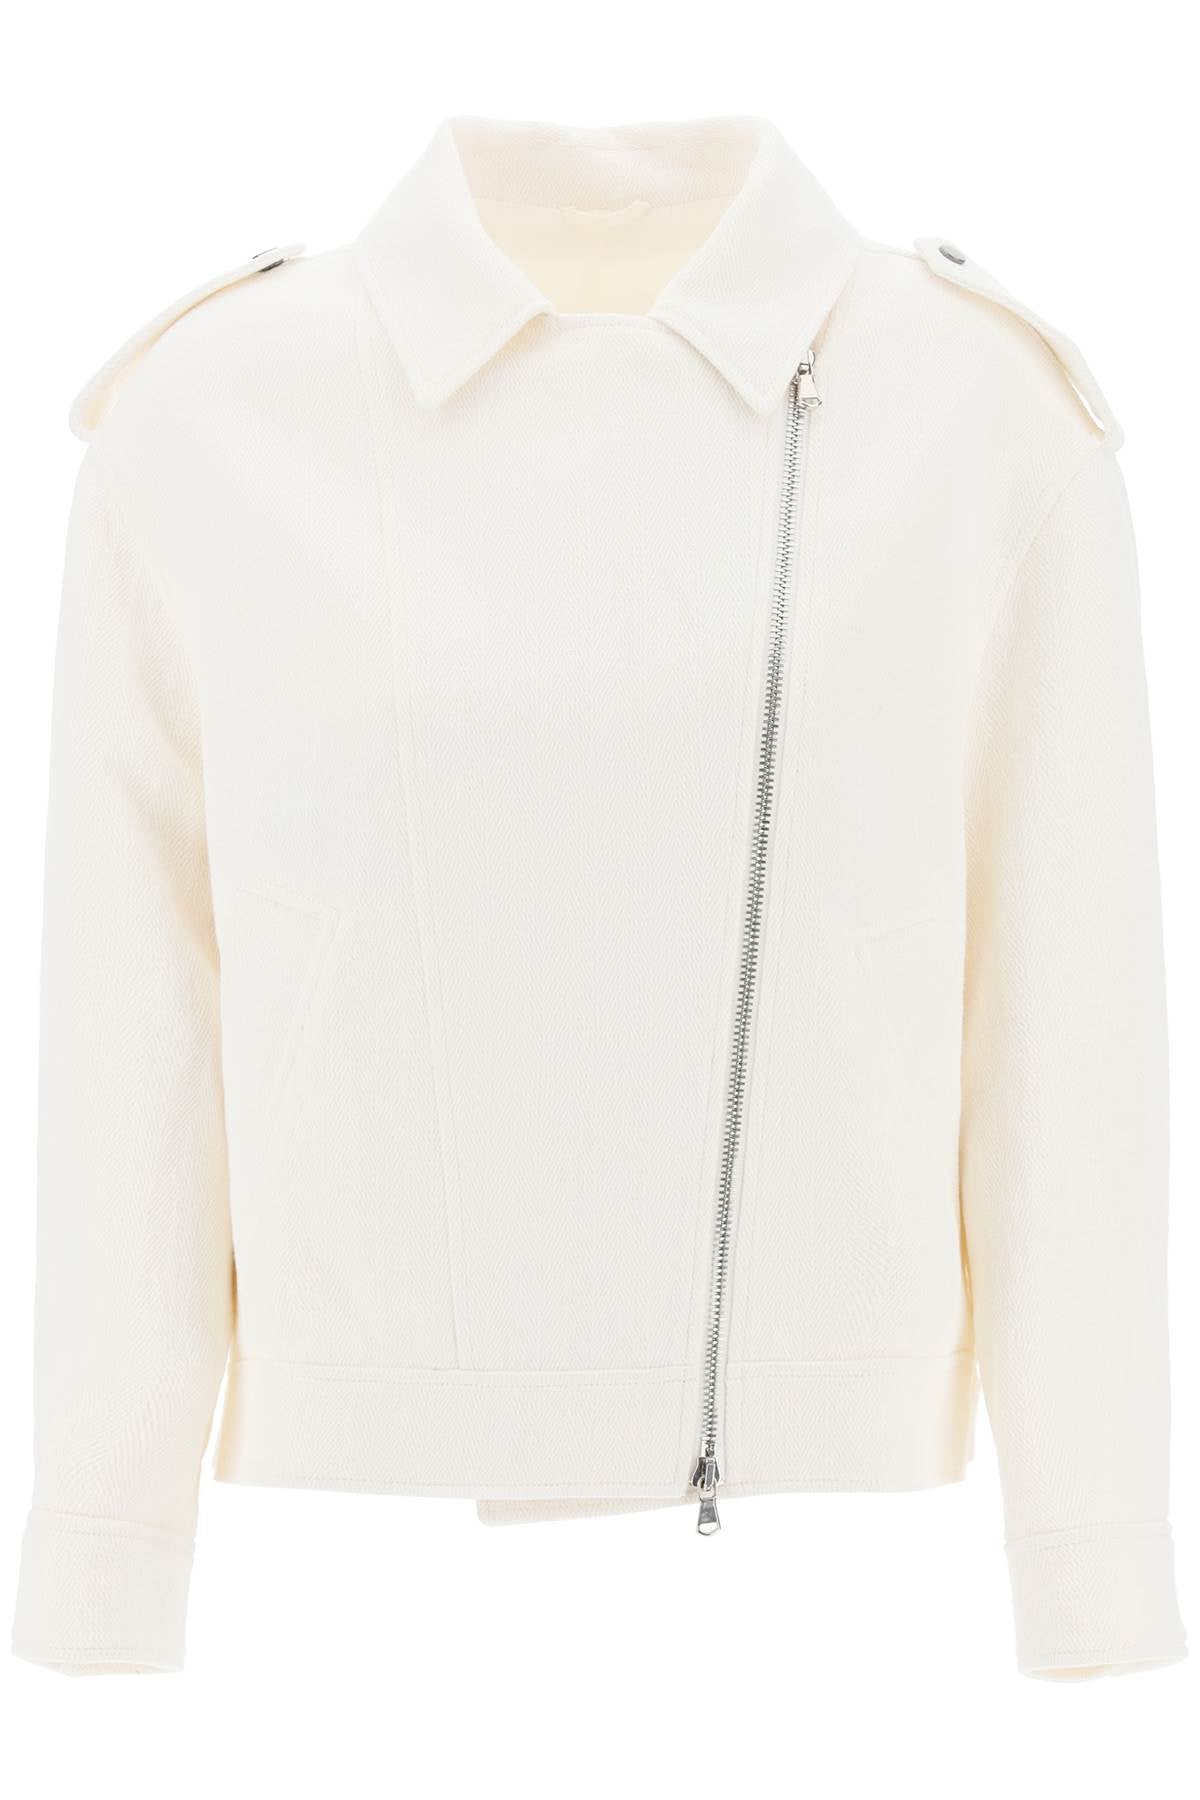 Cotton-Linen Biker Jacket